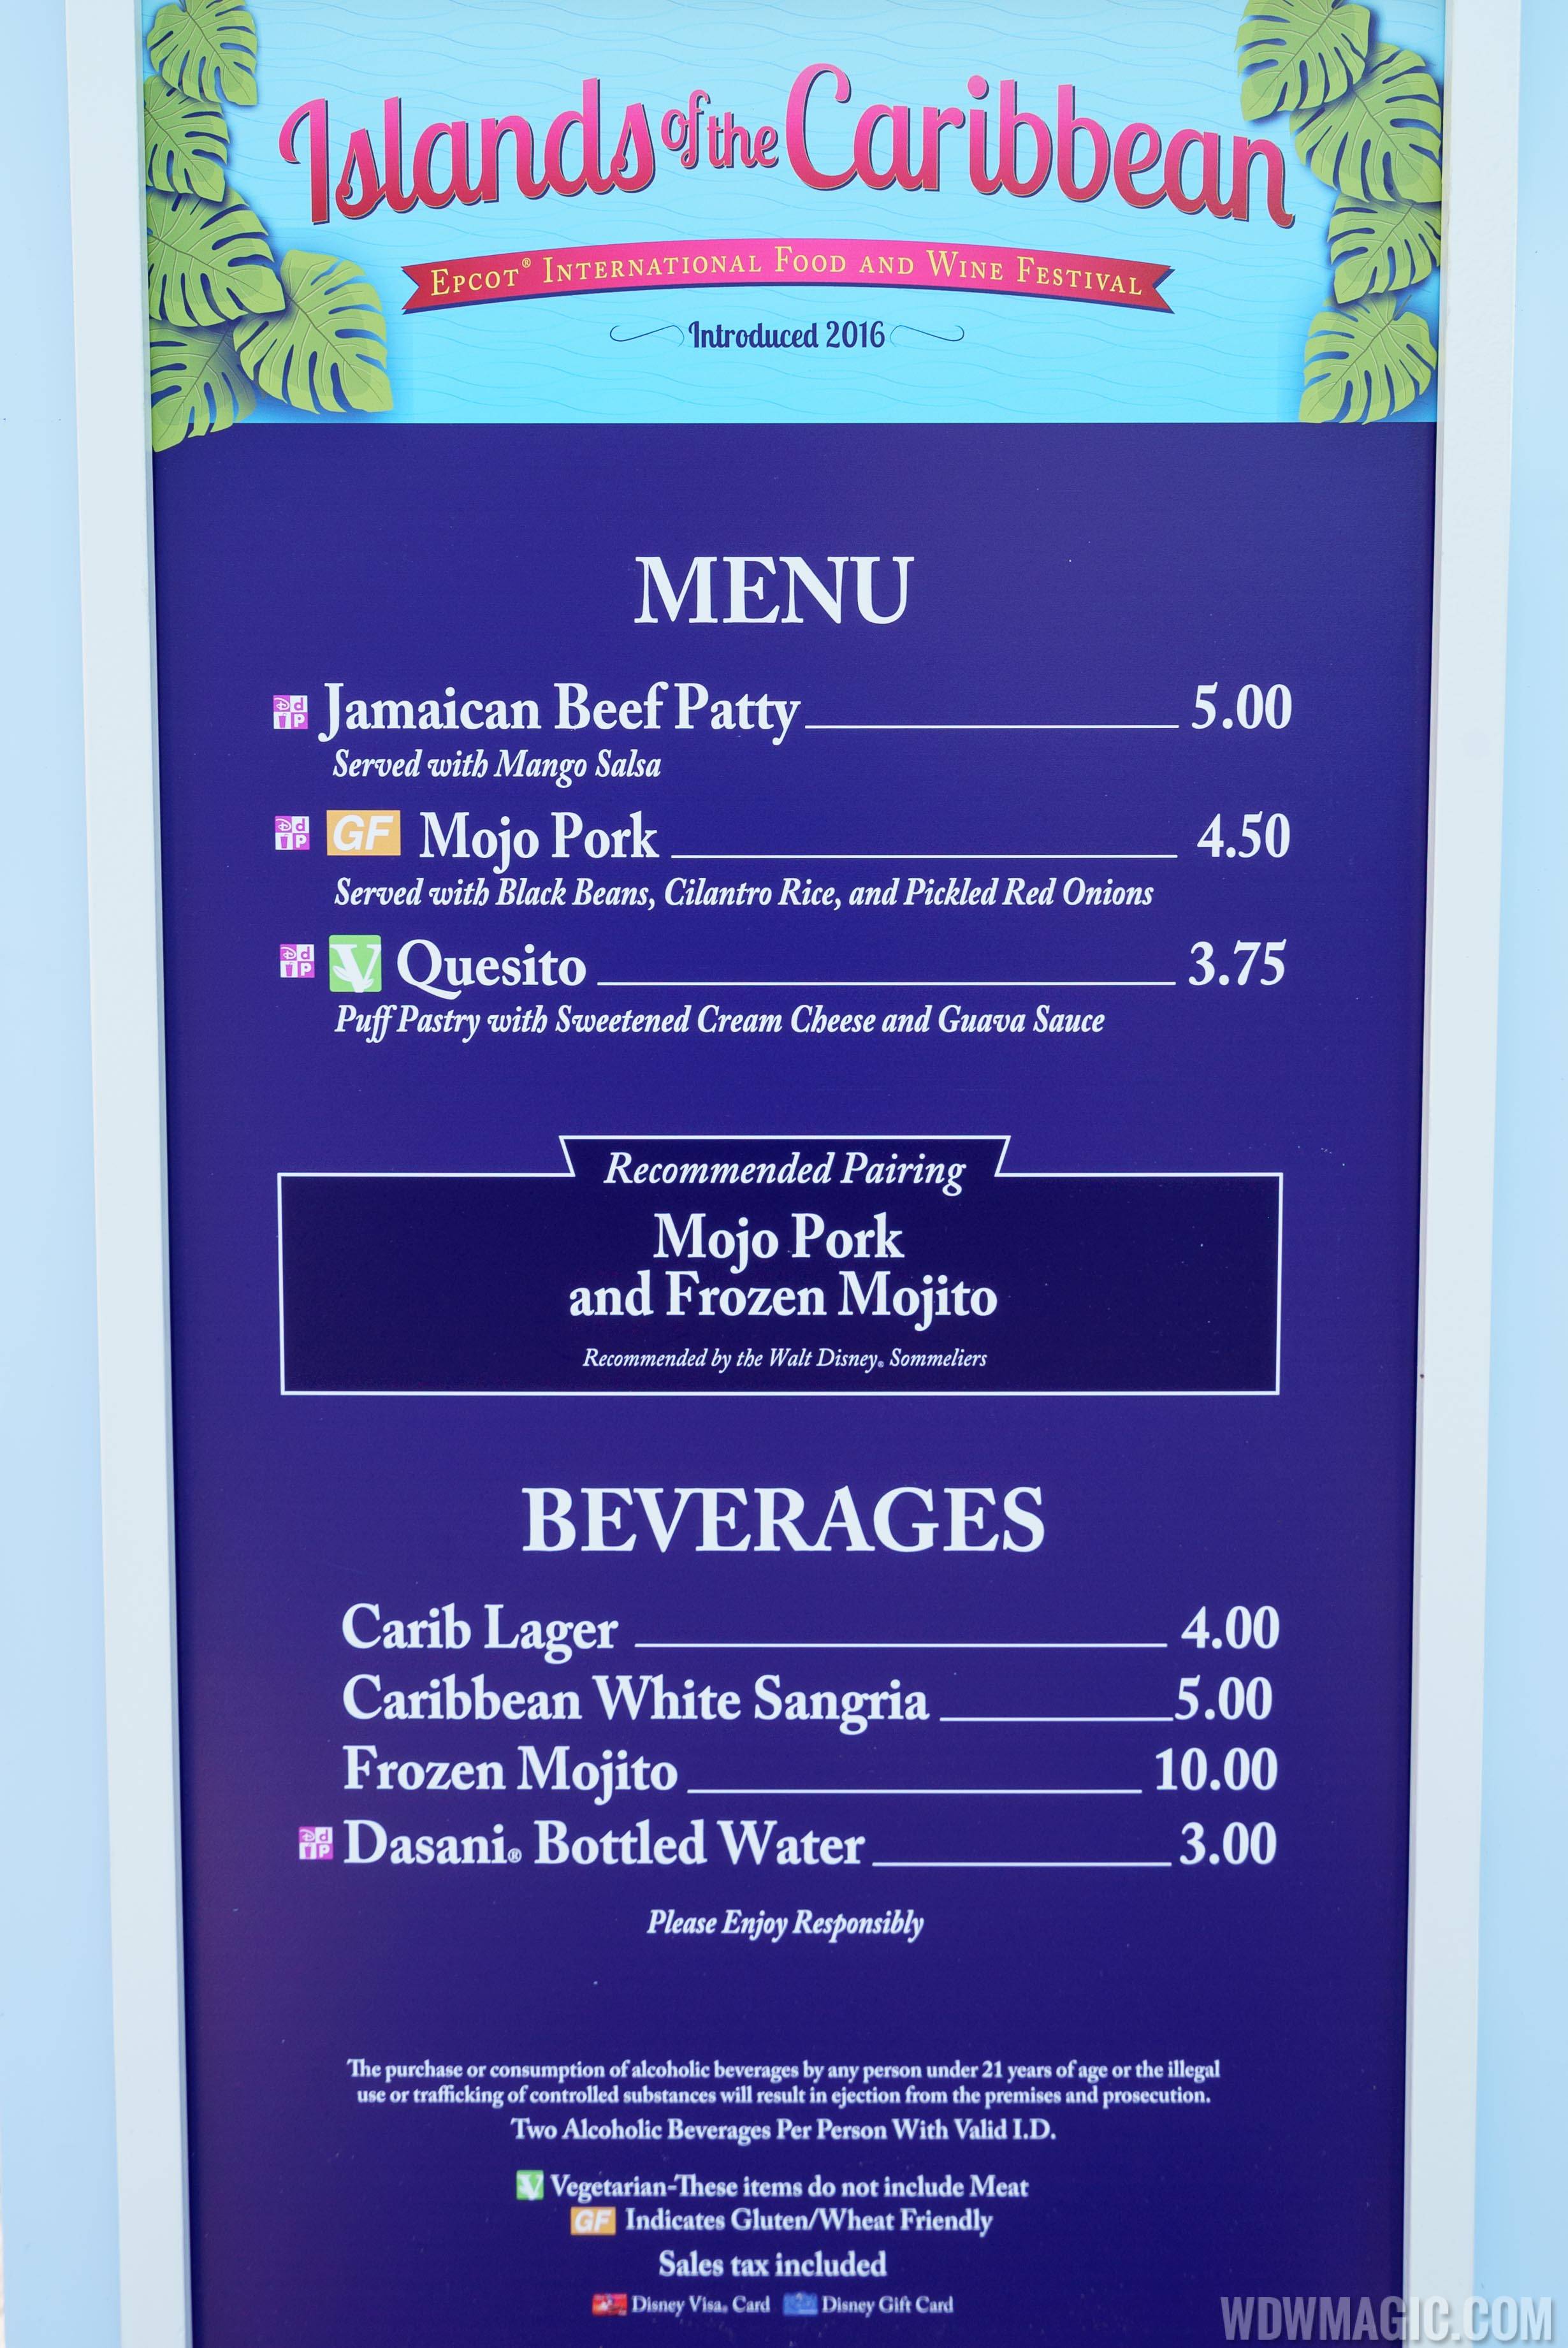 2017 Epcot Food and Wine Festival - Island of the Caribbean marketplace kiosk menu